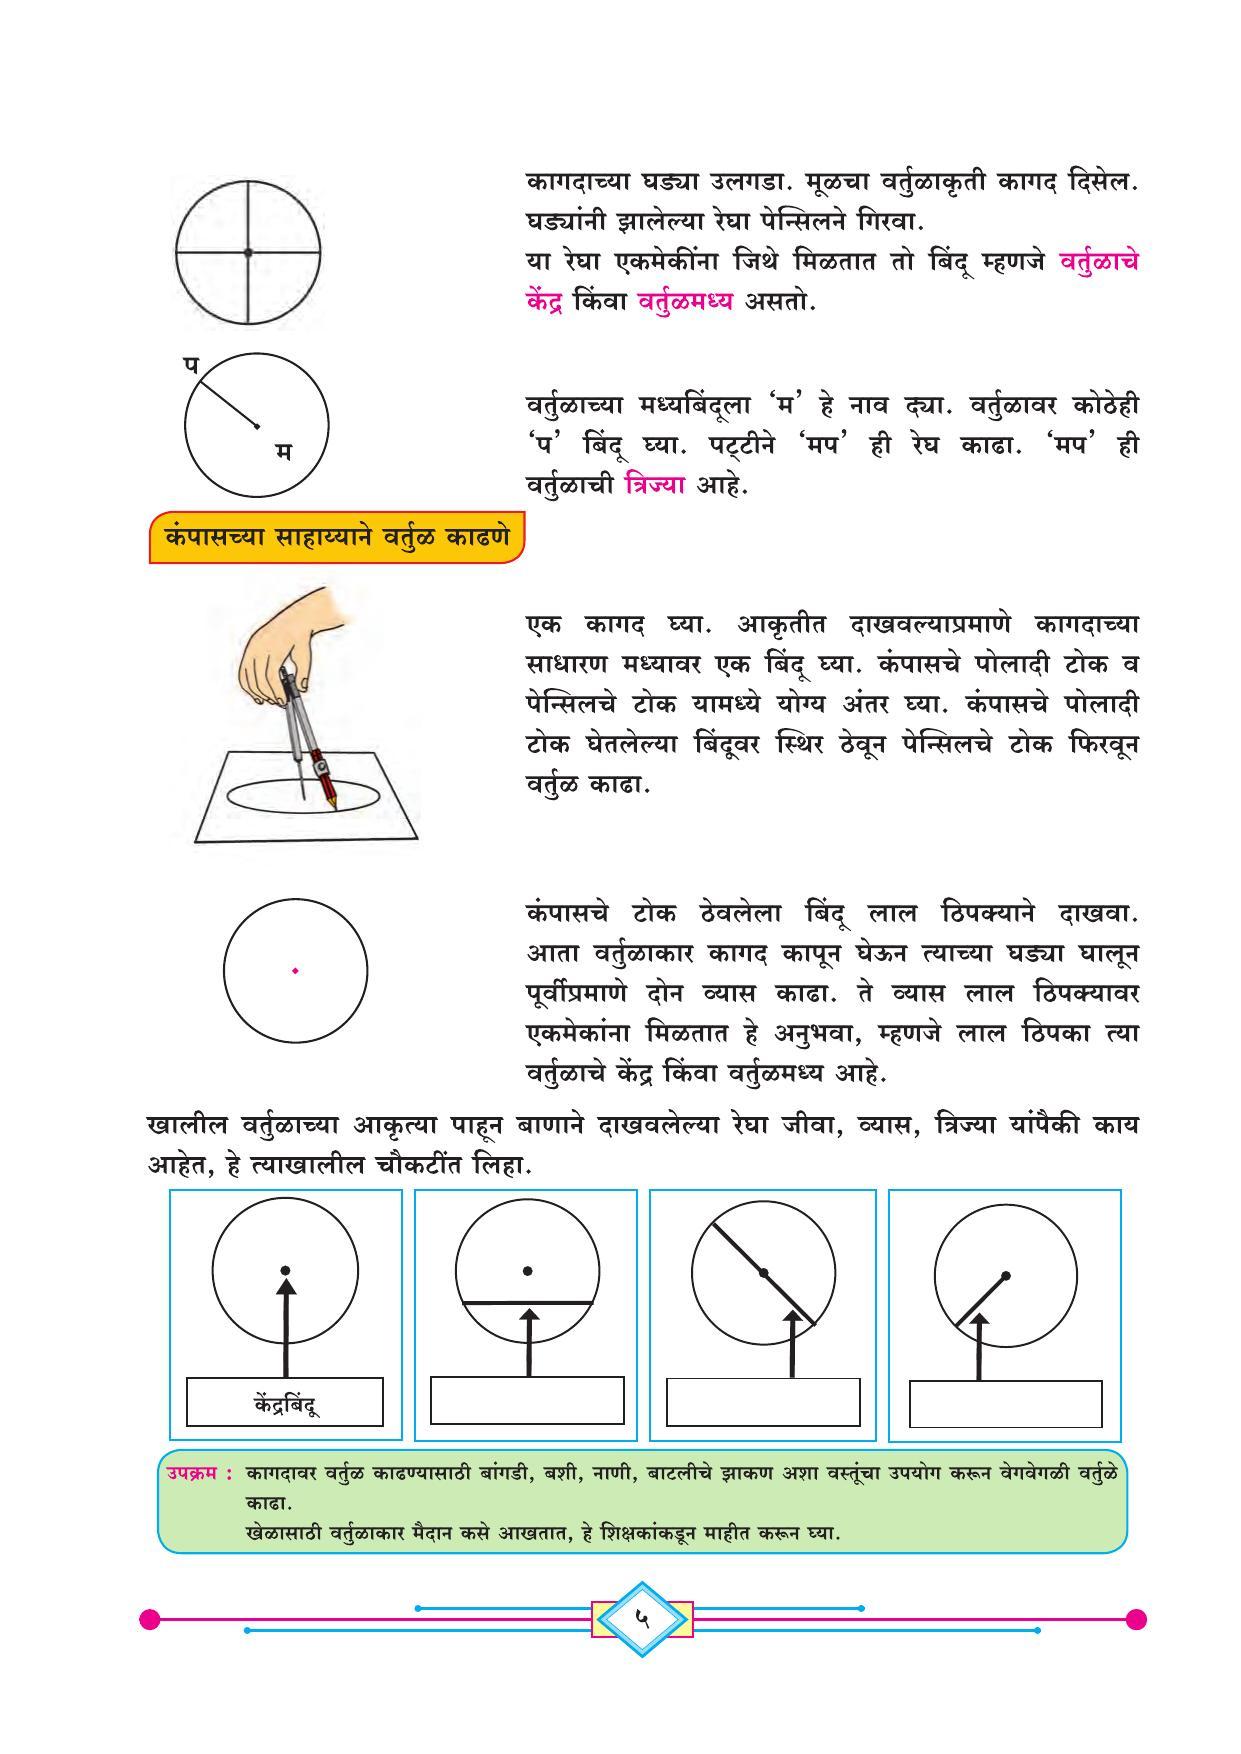 Maharashtra Board Class 4 Ganit (Marathi Medium) Textbook - Page 15